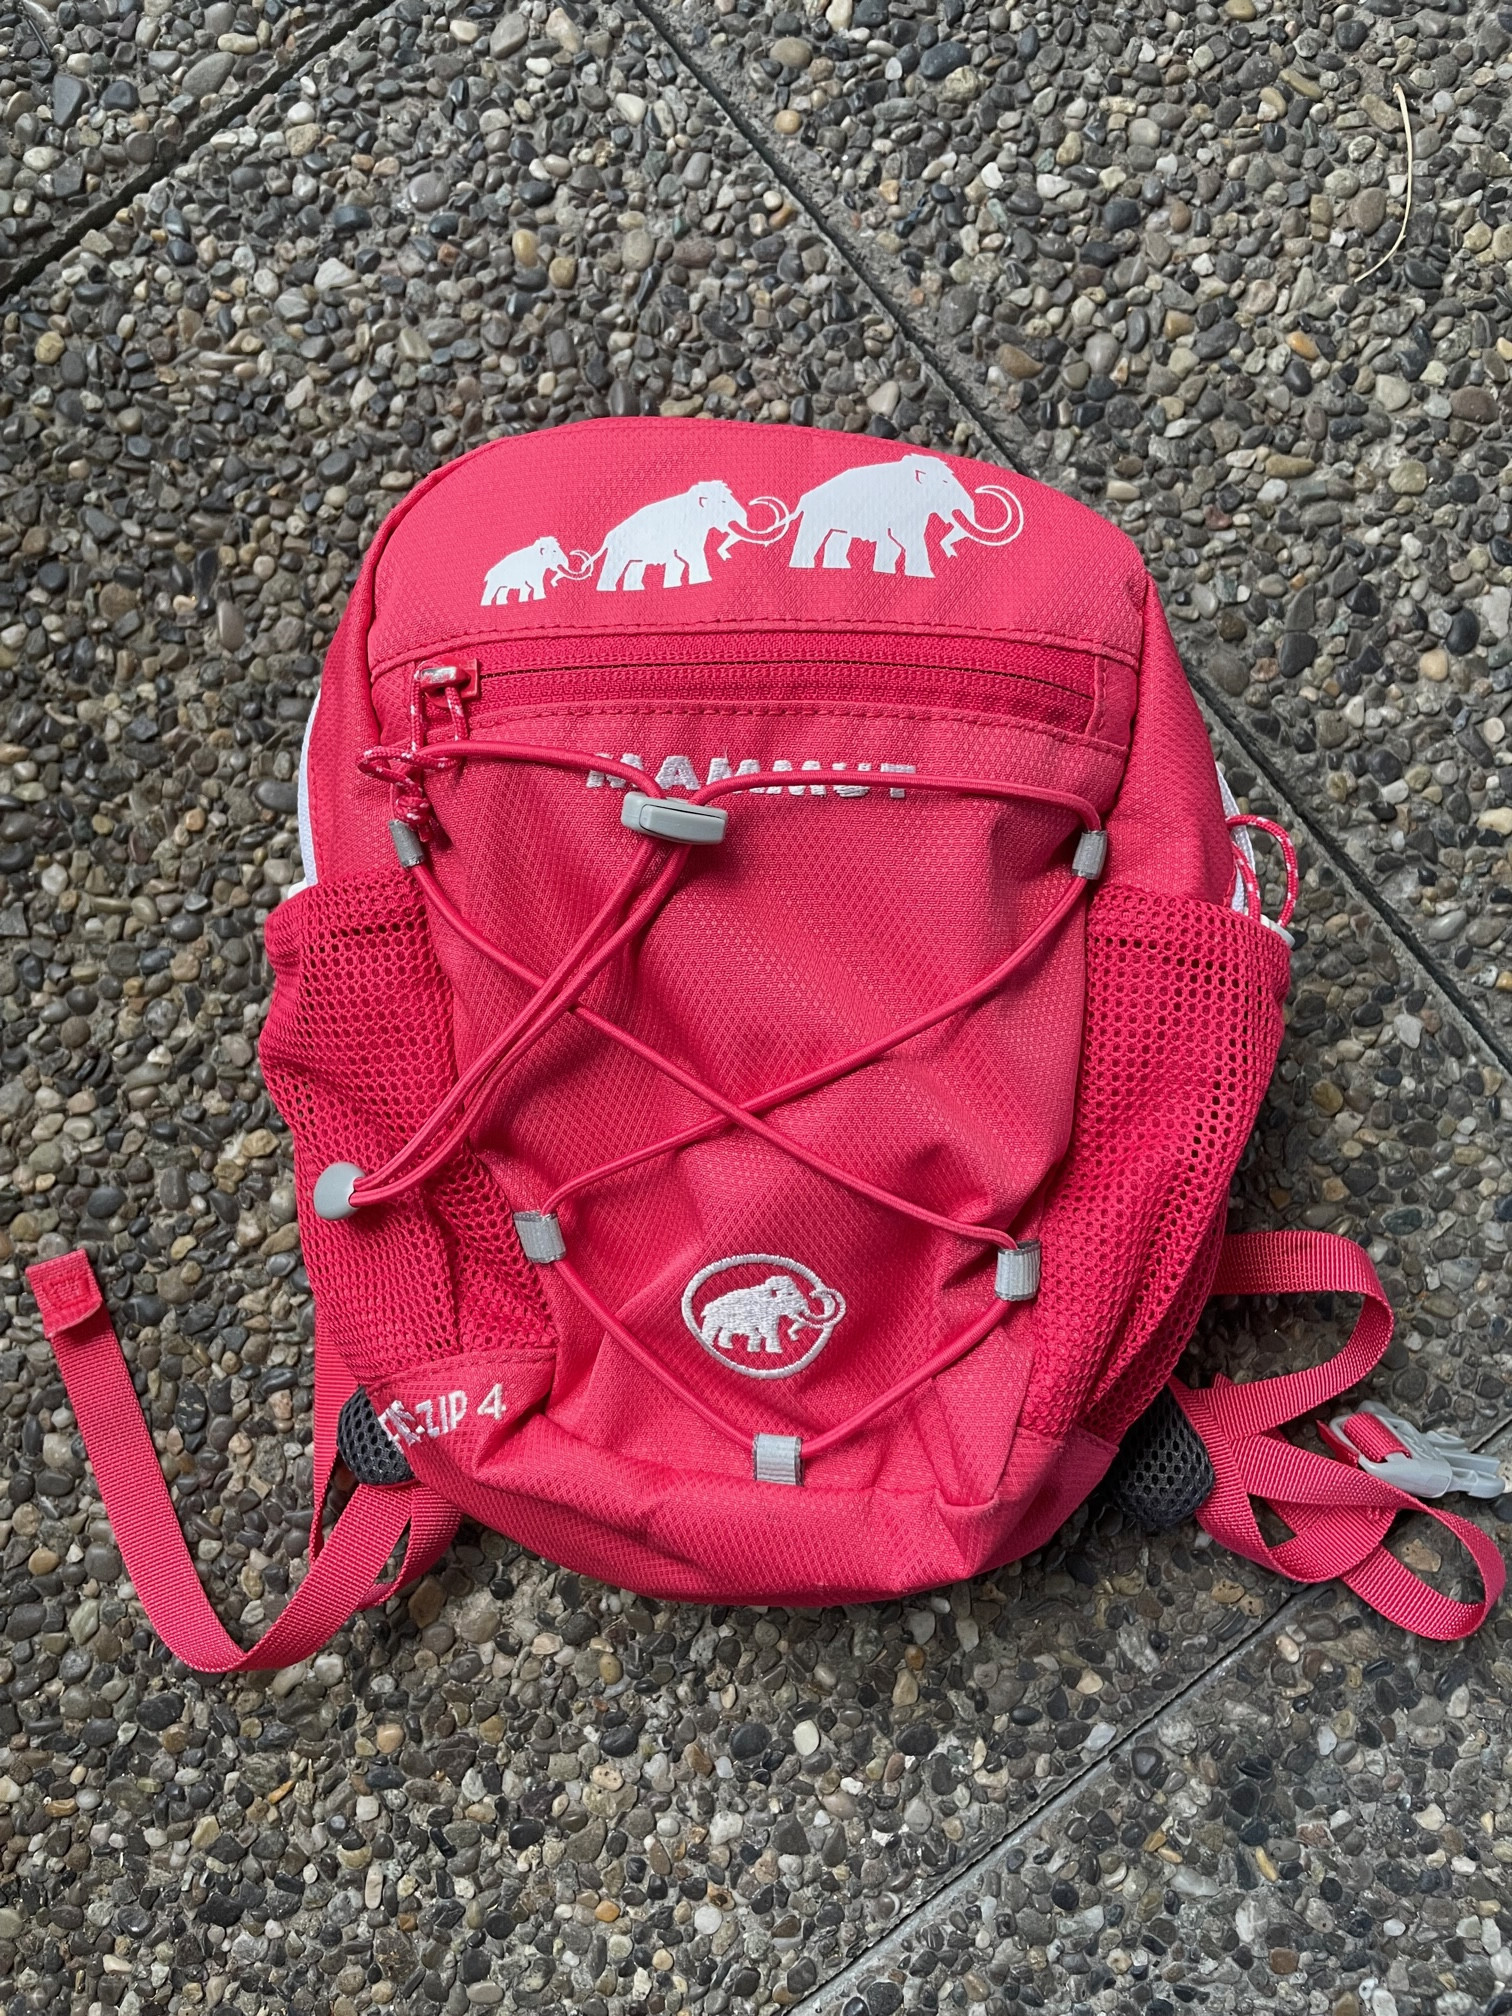 Mammut child backpack